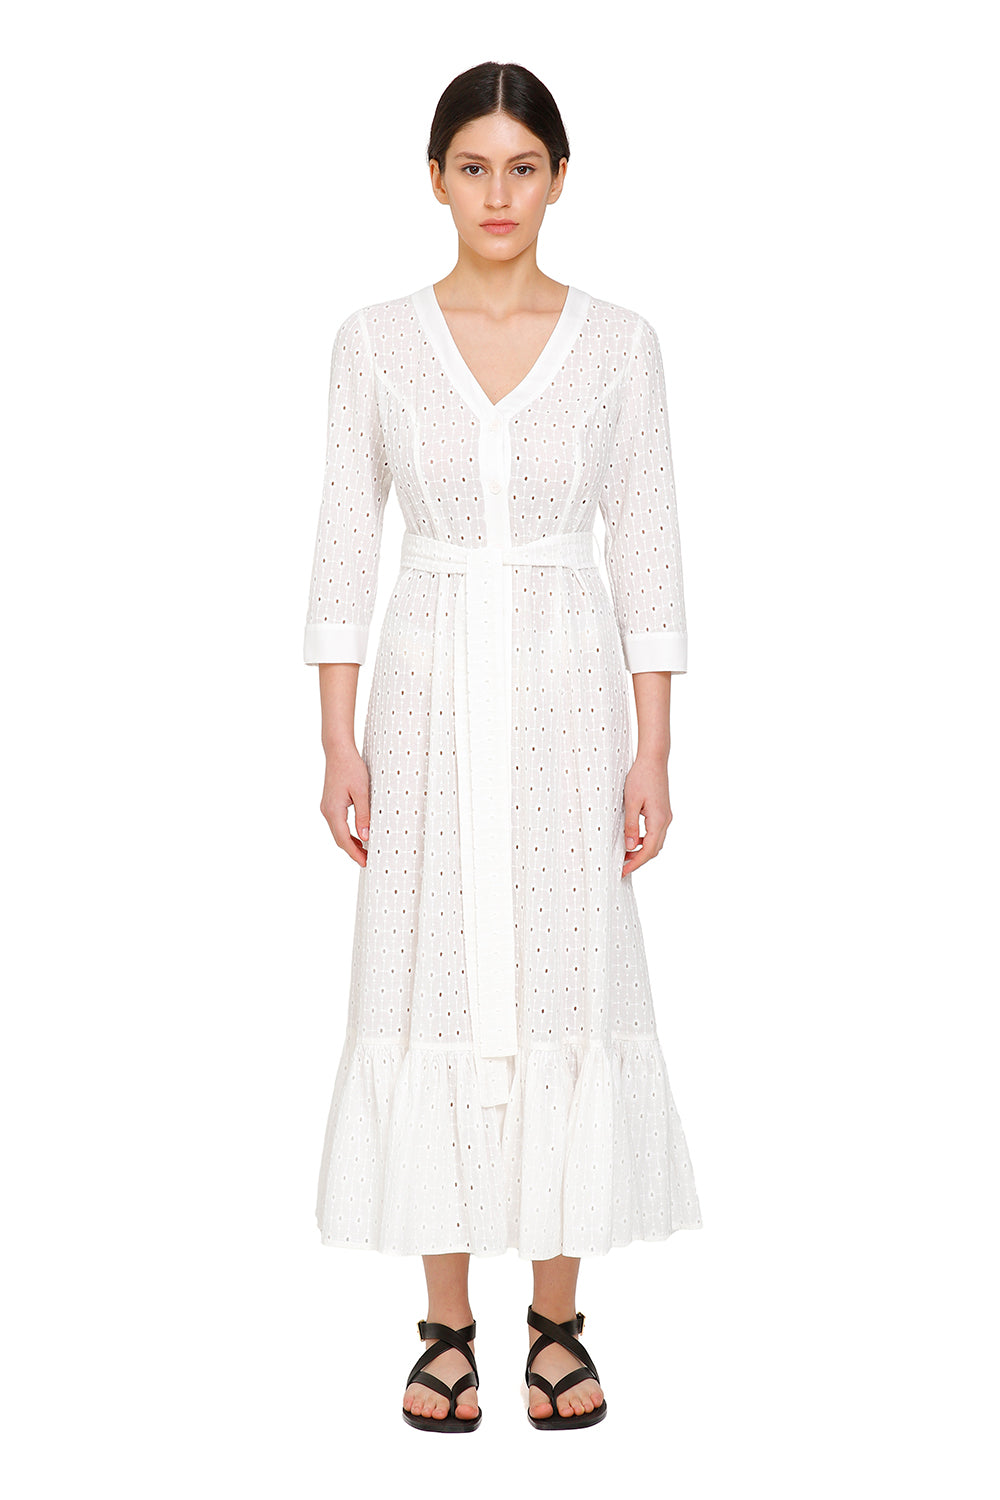 Beatrice 2 White Cotton Midi Shirt Dress